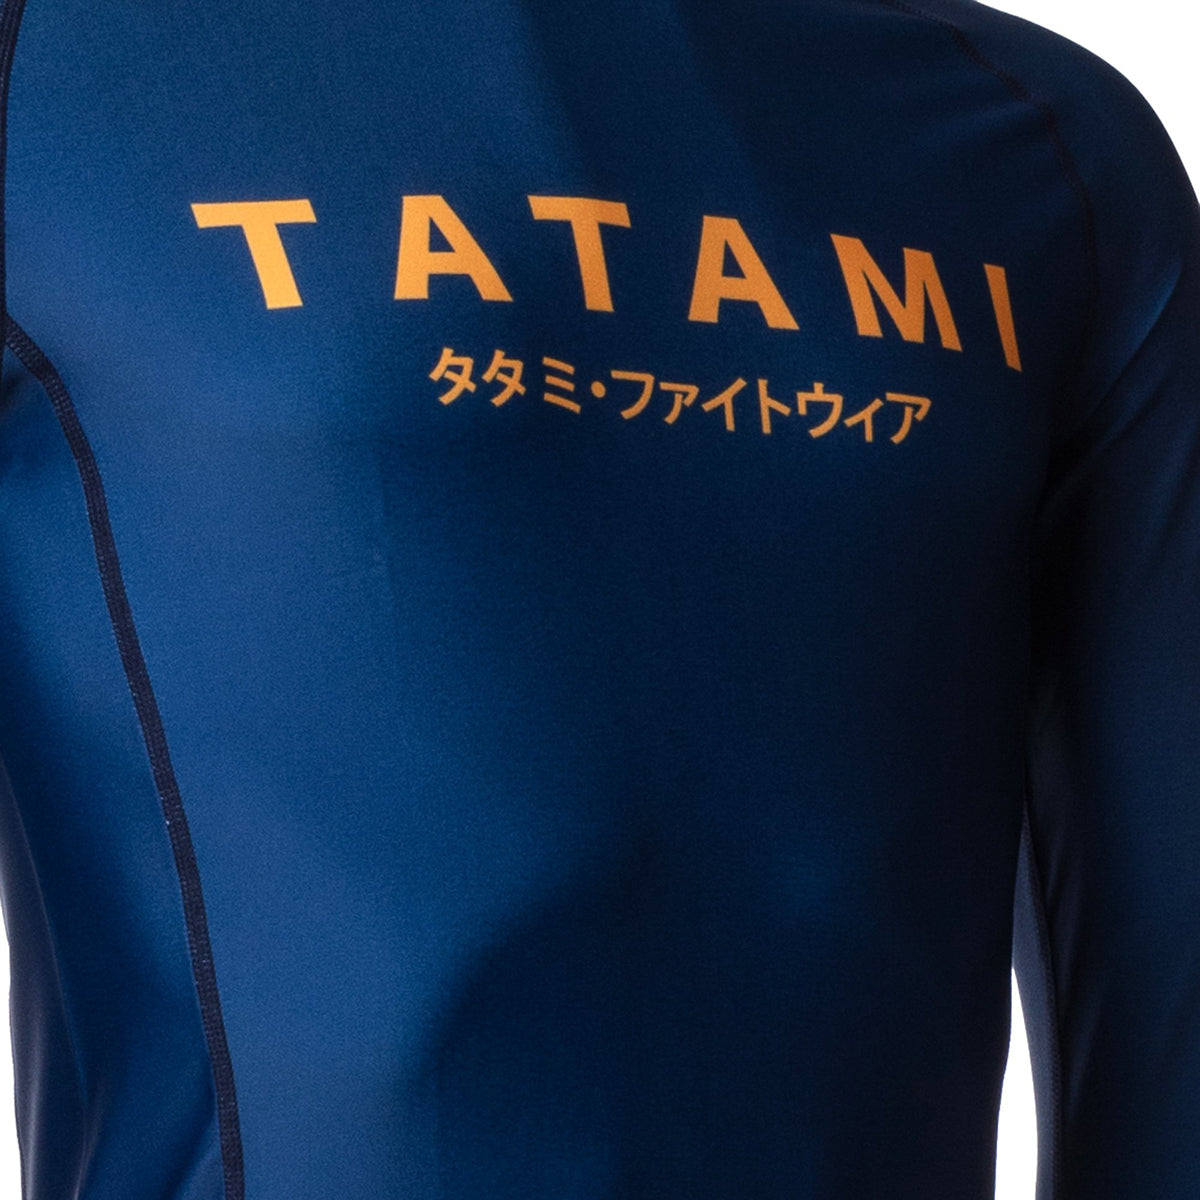 Tatami Fightwear Katakana Long Sleeve Rashguard - Navy Tatami Fightwear